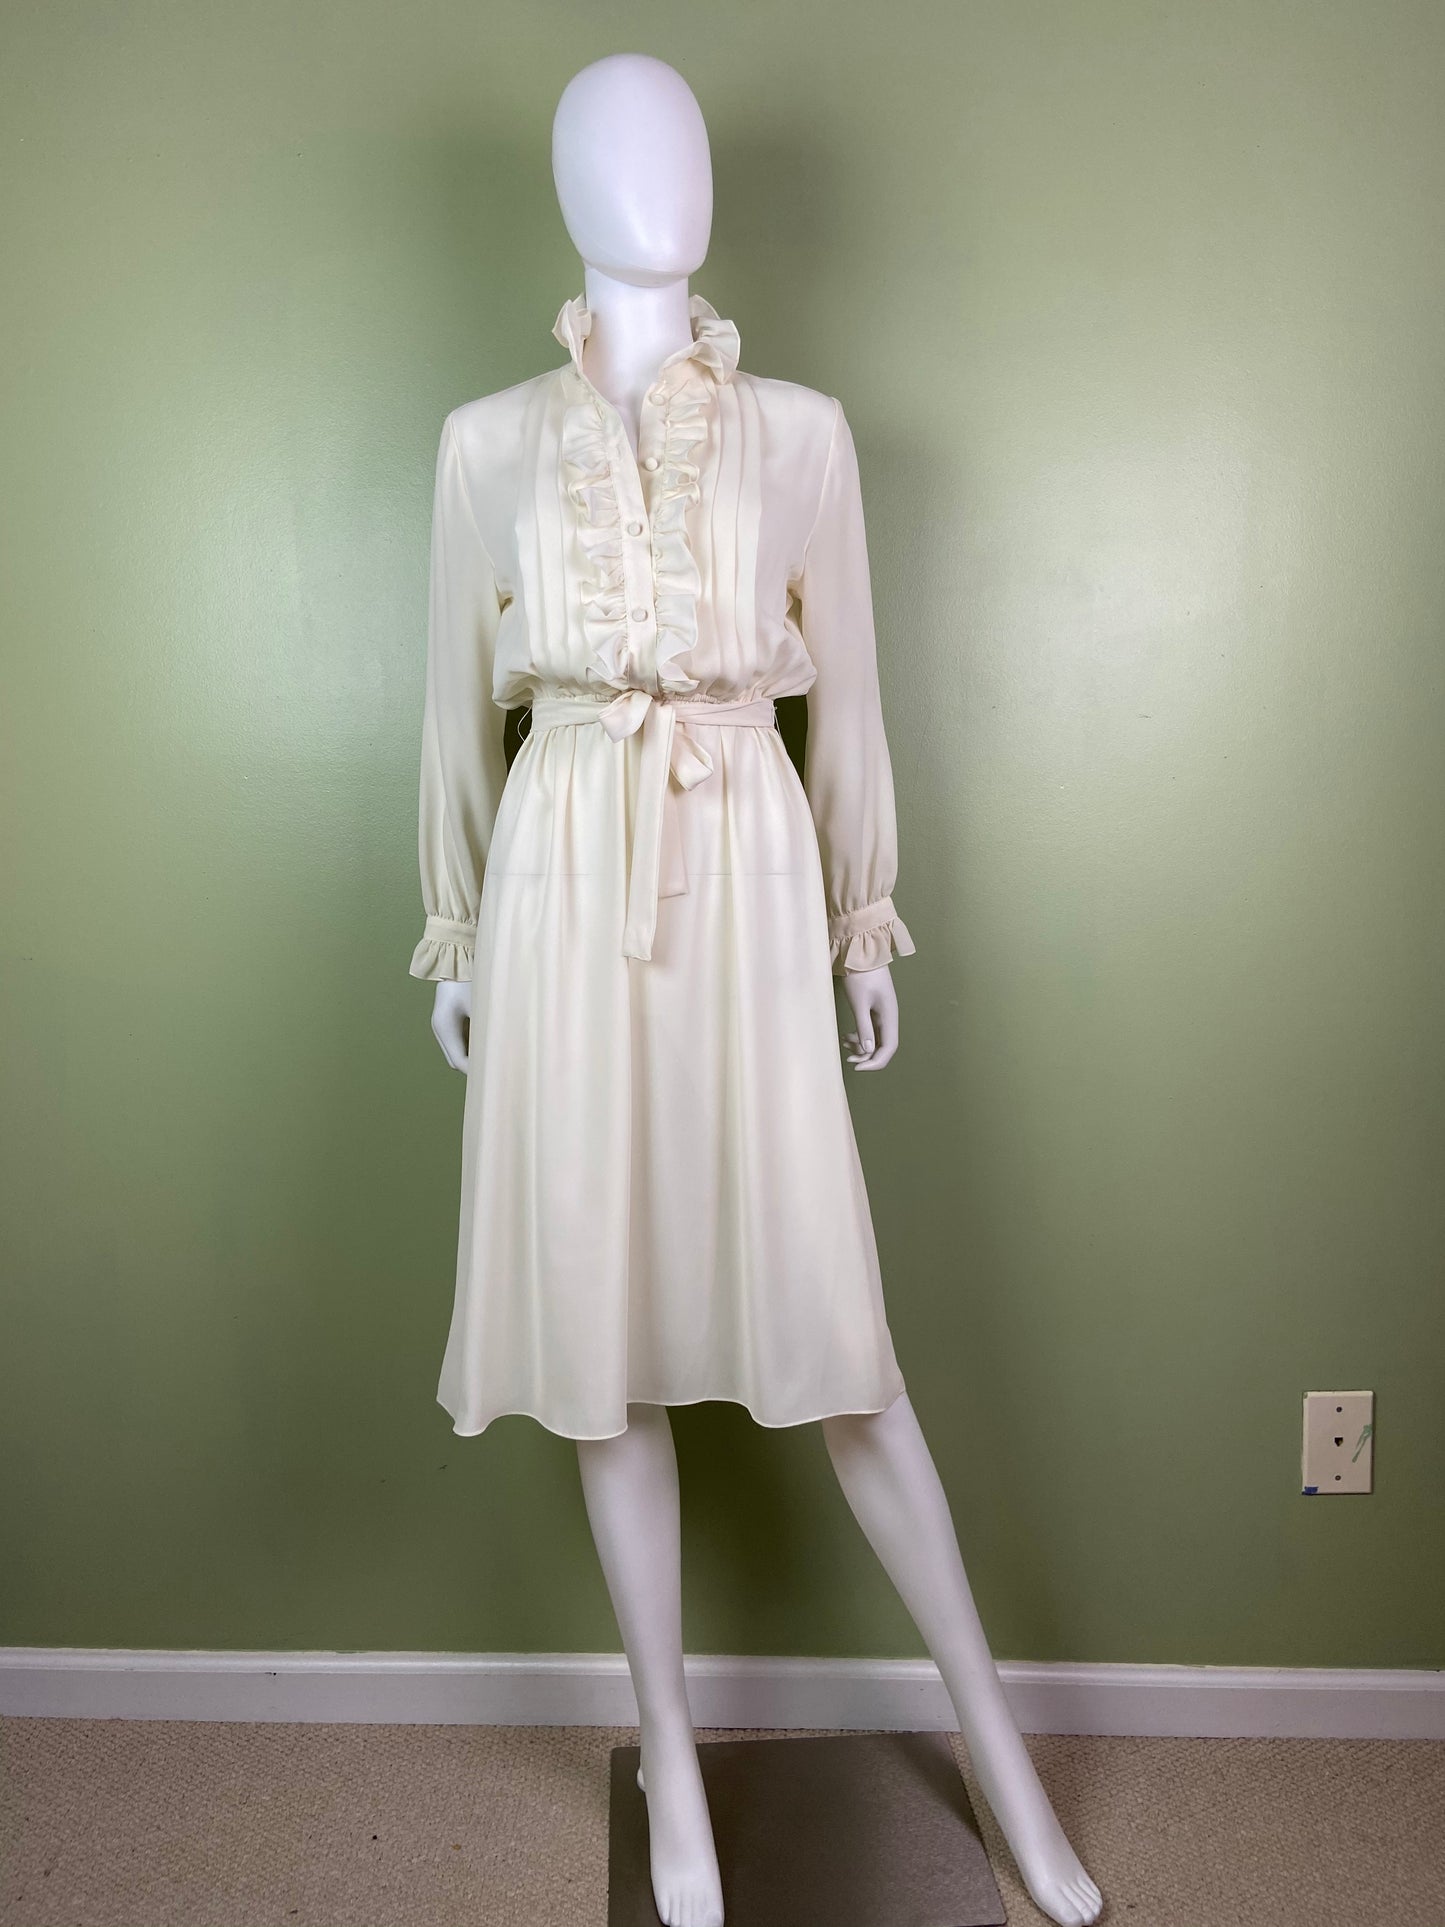 Vintage Astor One White Sheer Ruffle Pleated Fluid Disco Dress